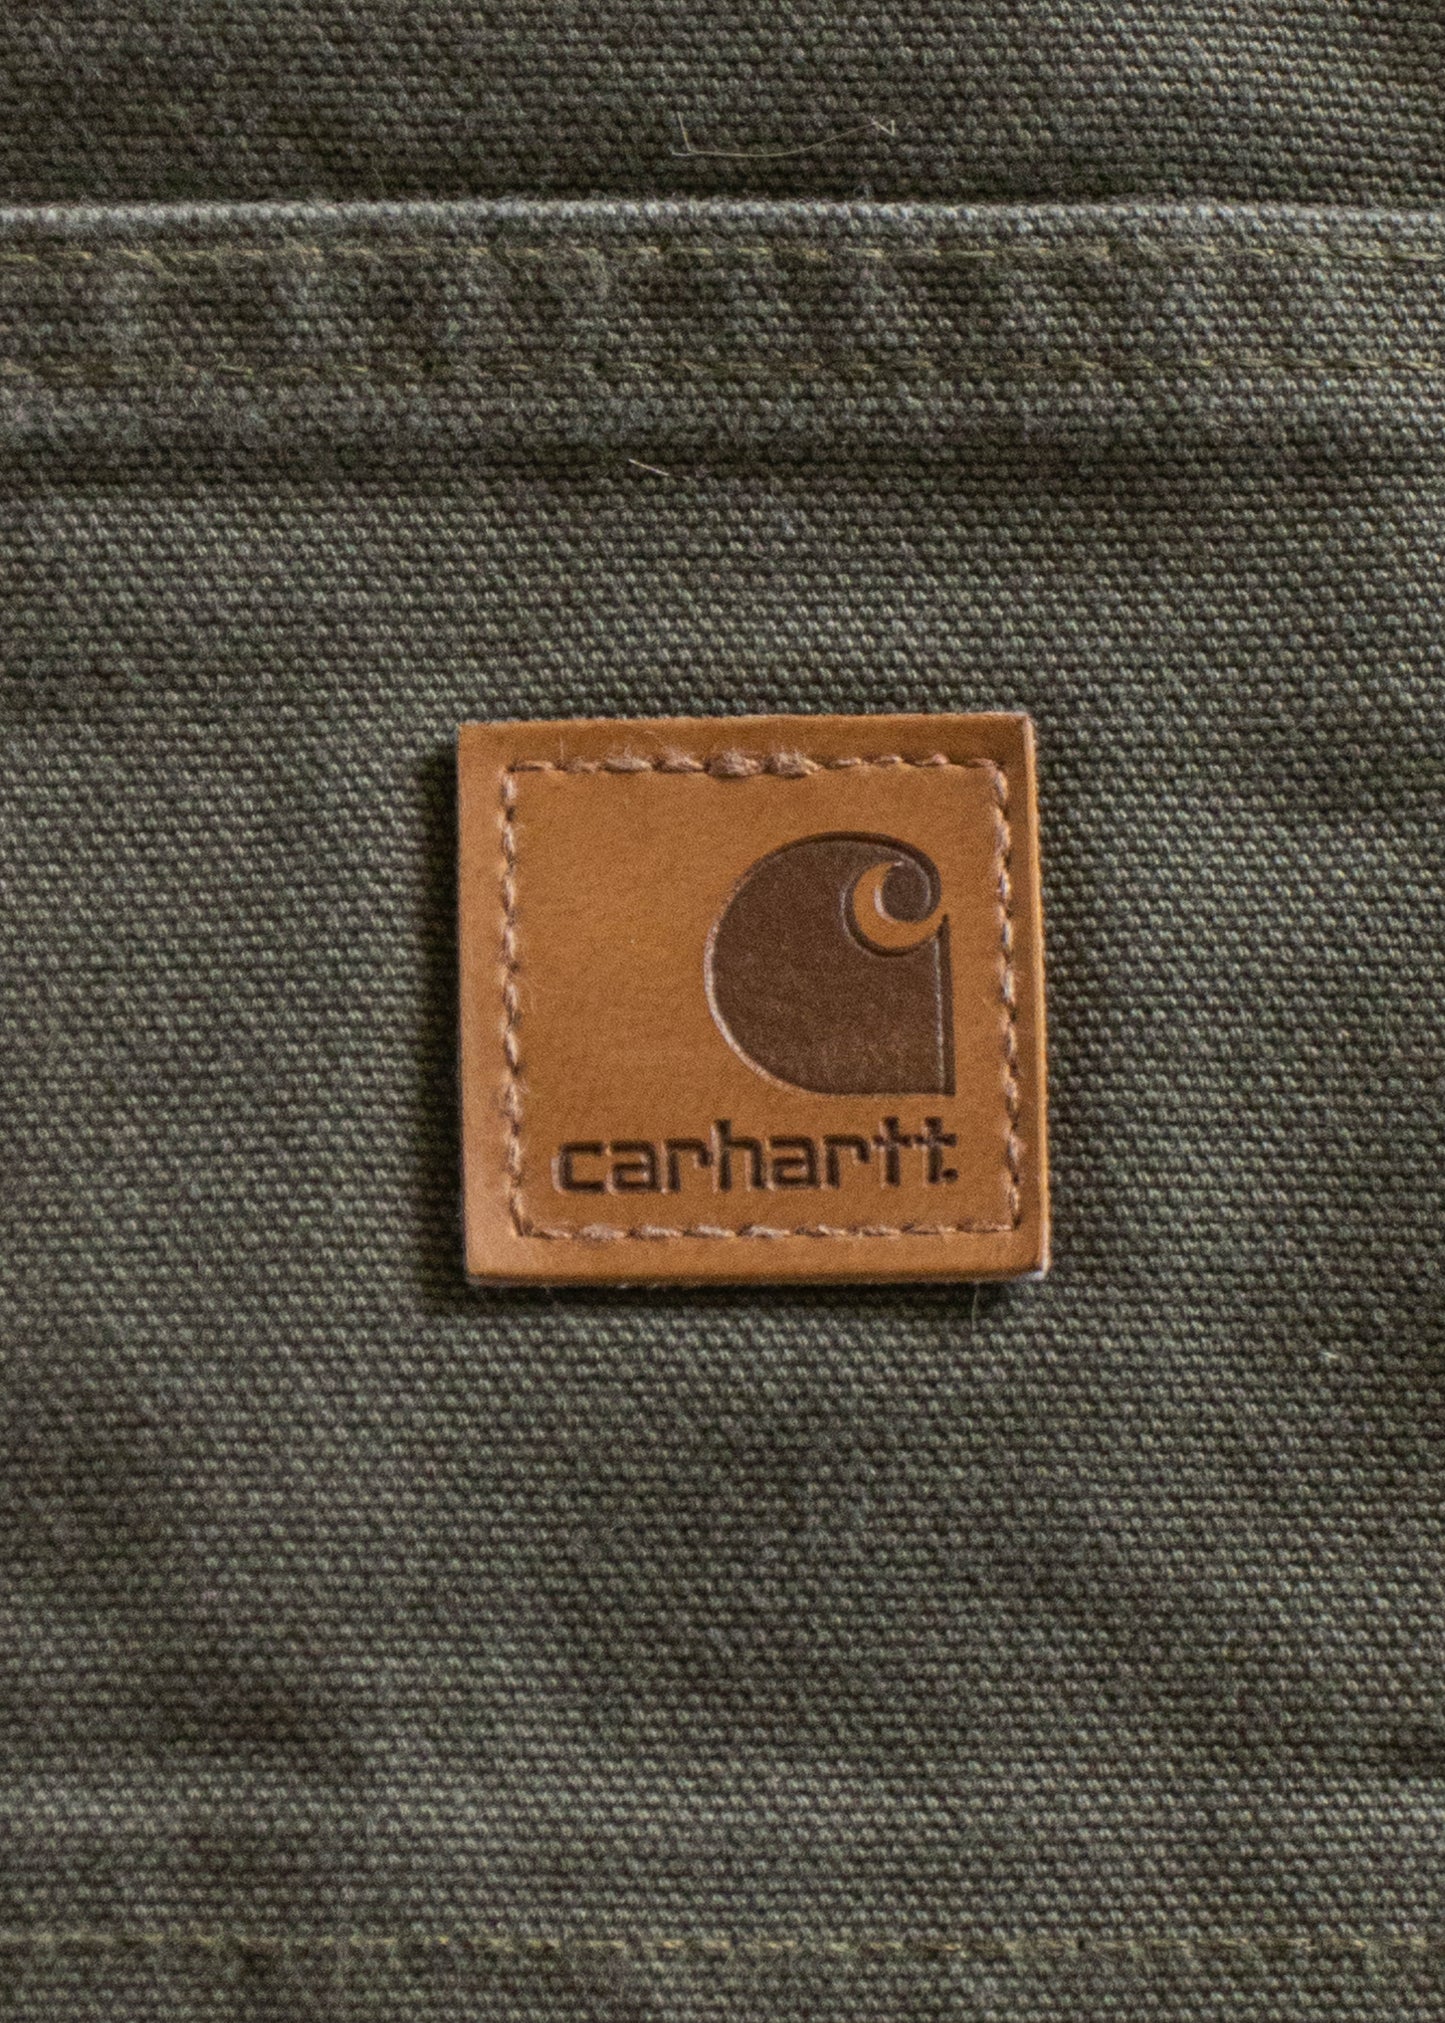 Carhartt Carpenter Pants Size Women's 40 Men's 42